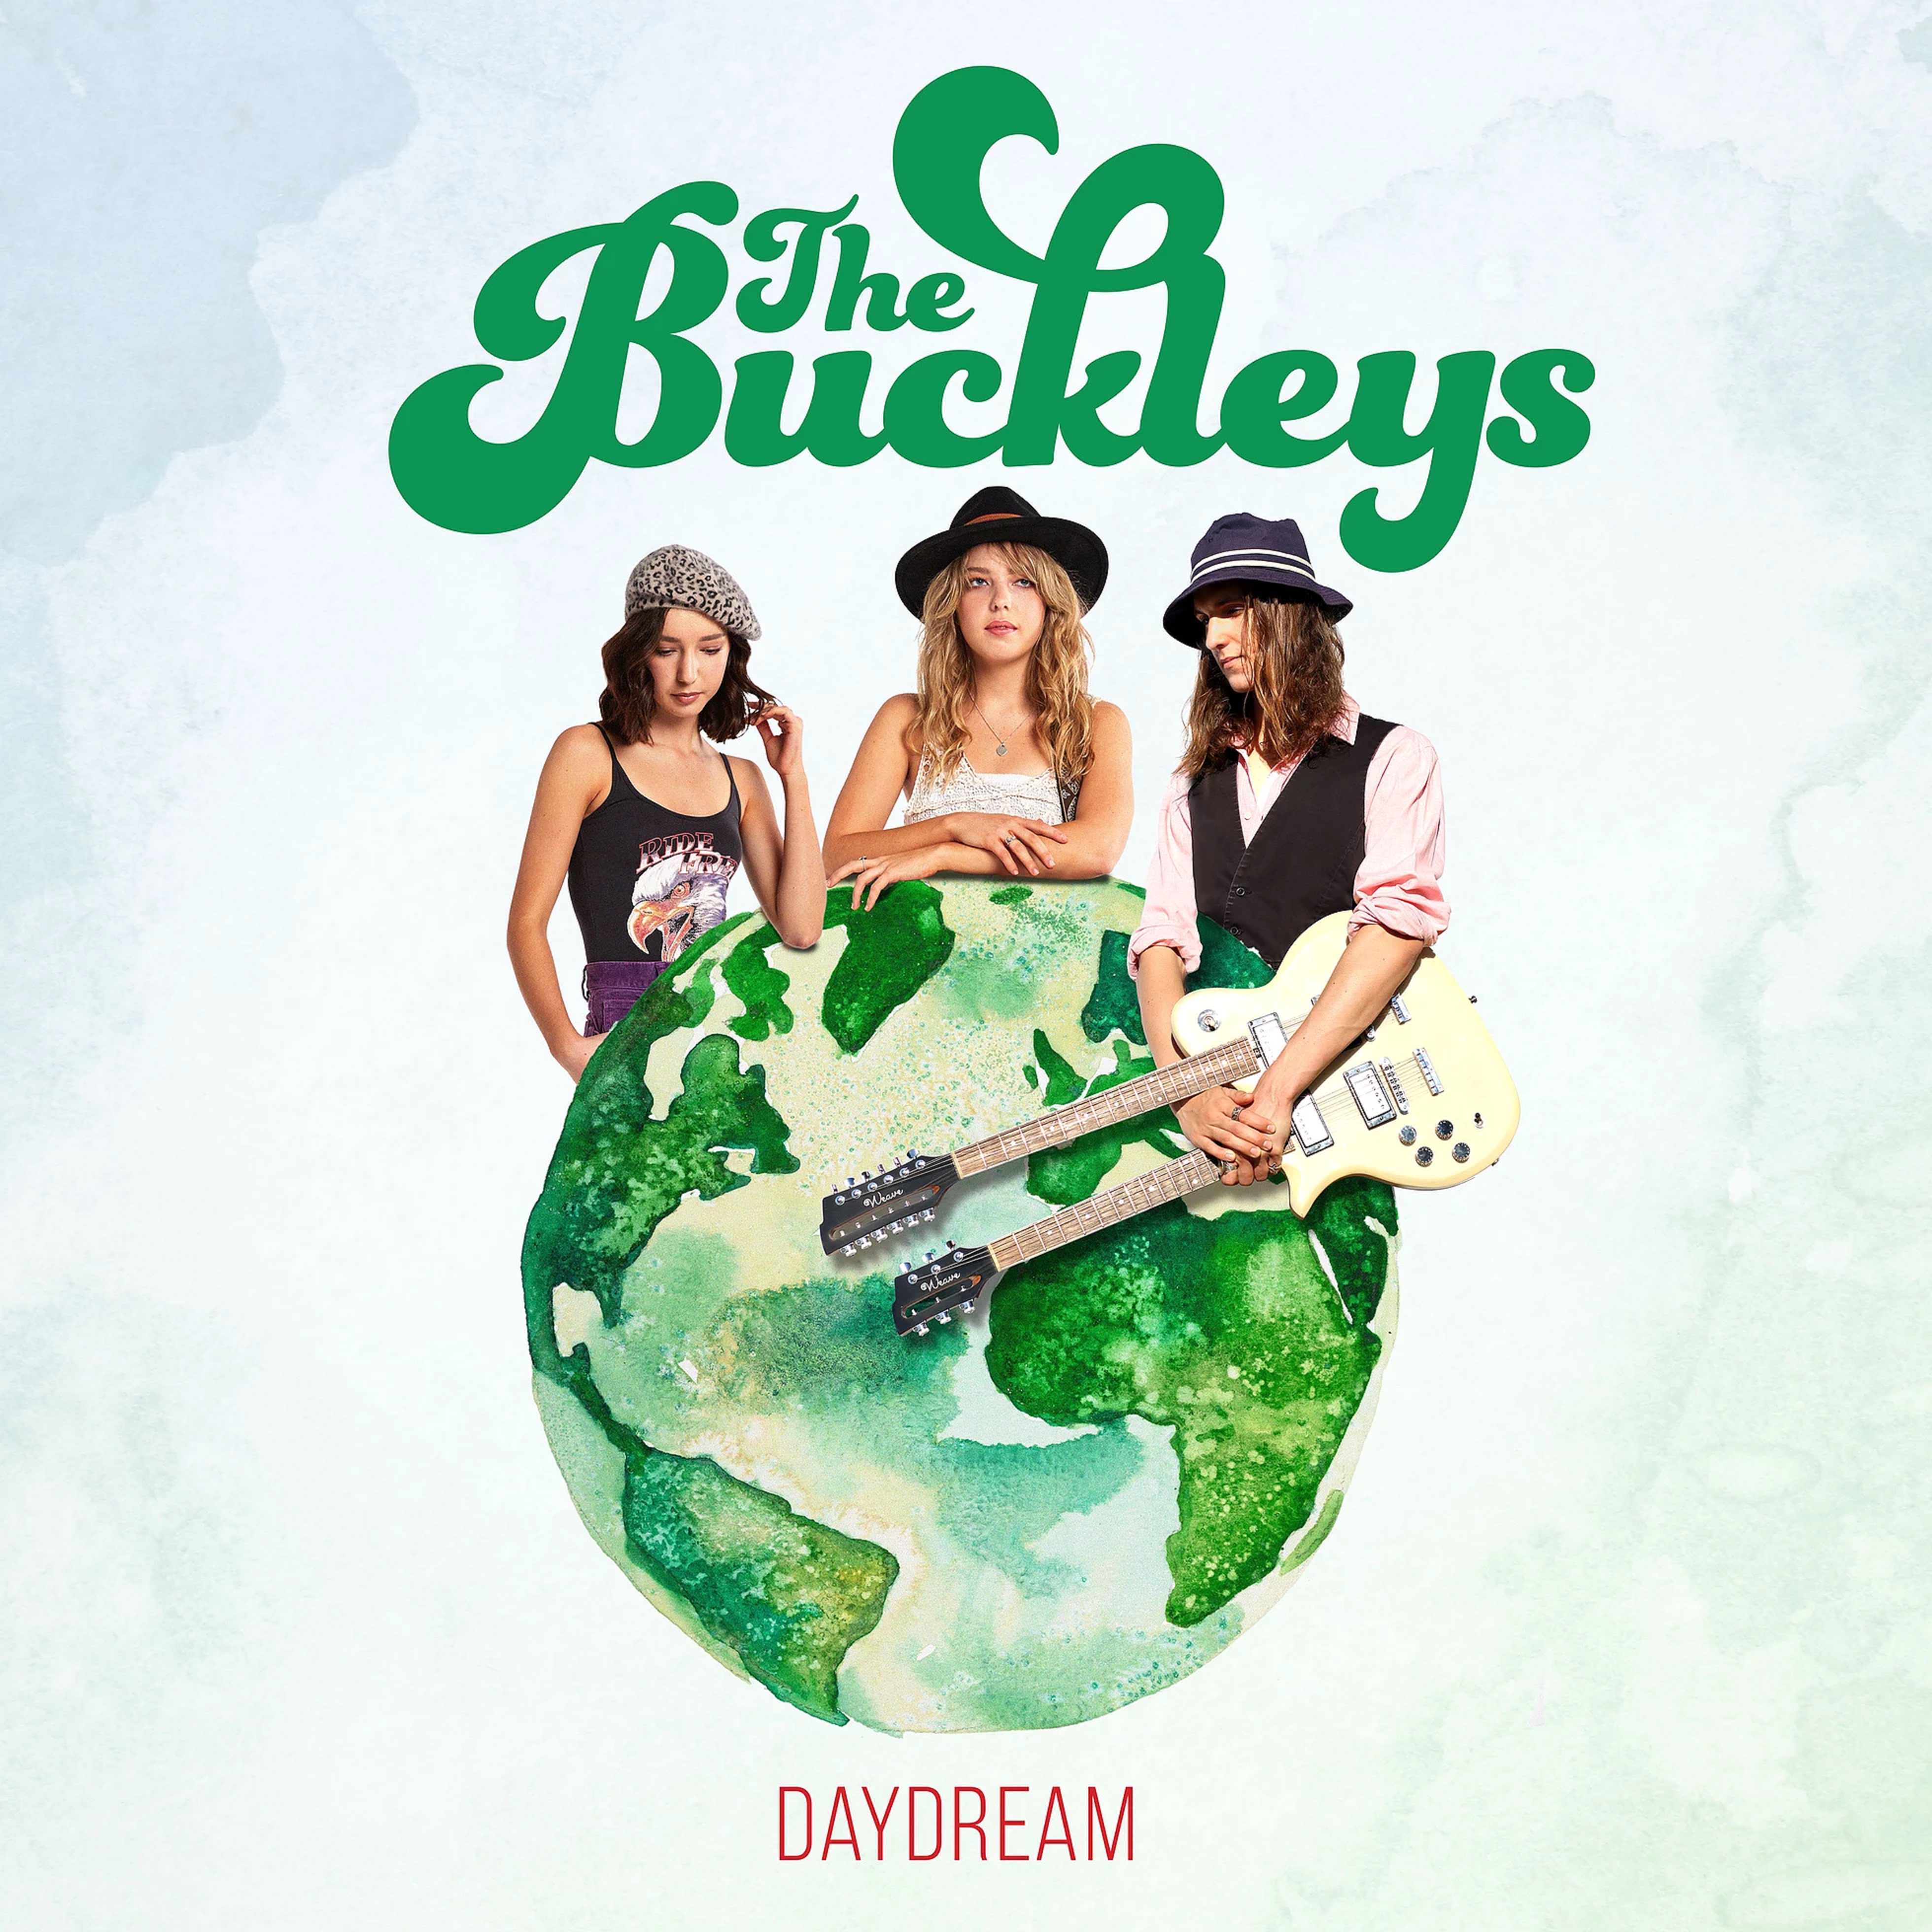 The Buckleys release their debut Album, "Daydream"